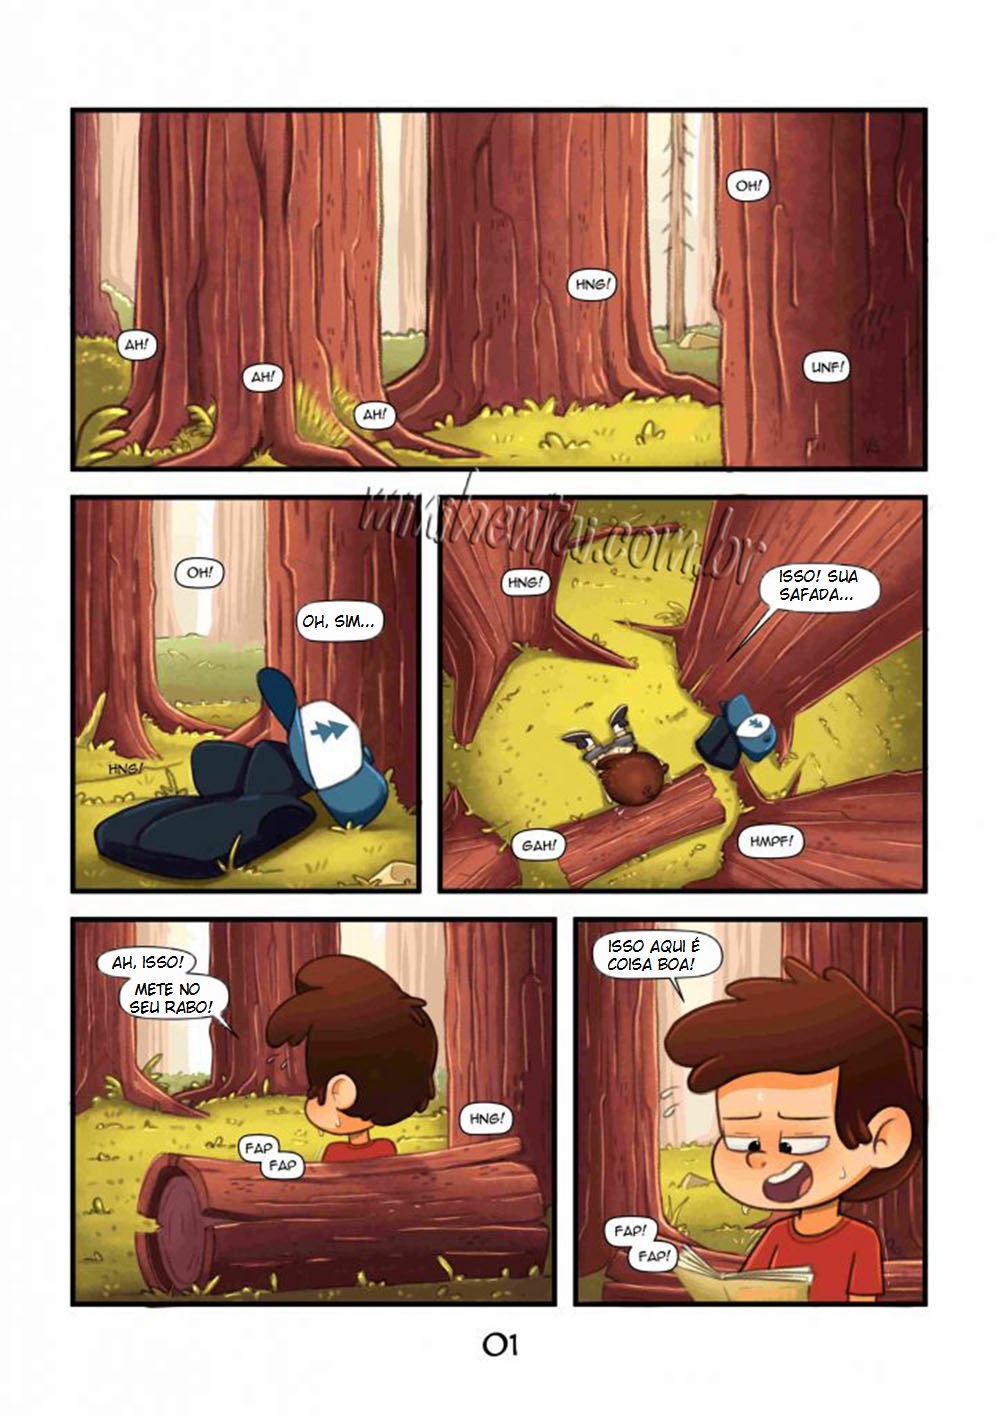 Secret Of The Woods â€“ Gravity Falls | RevistaseQuadrinhos ...